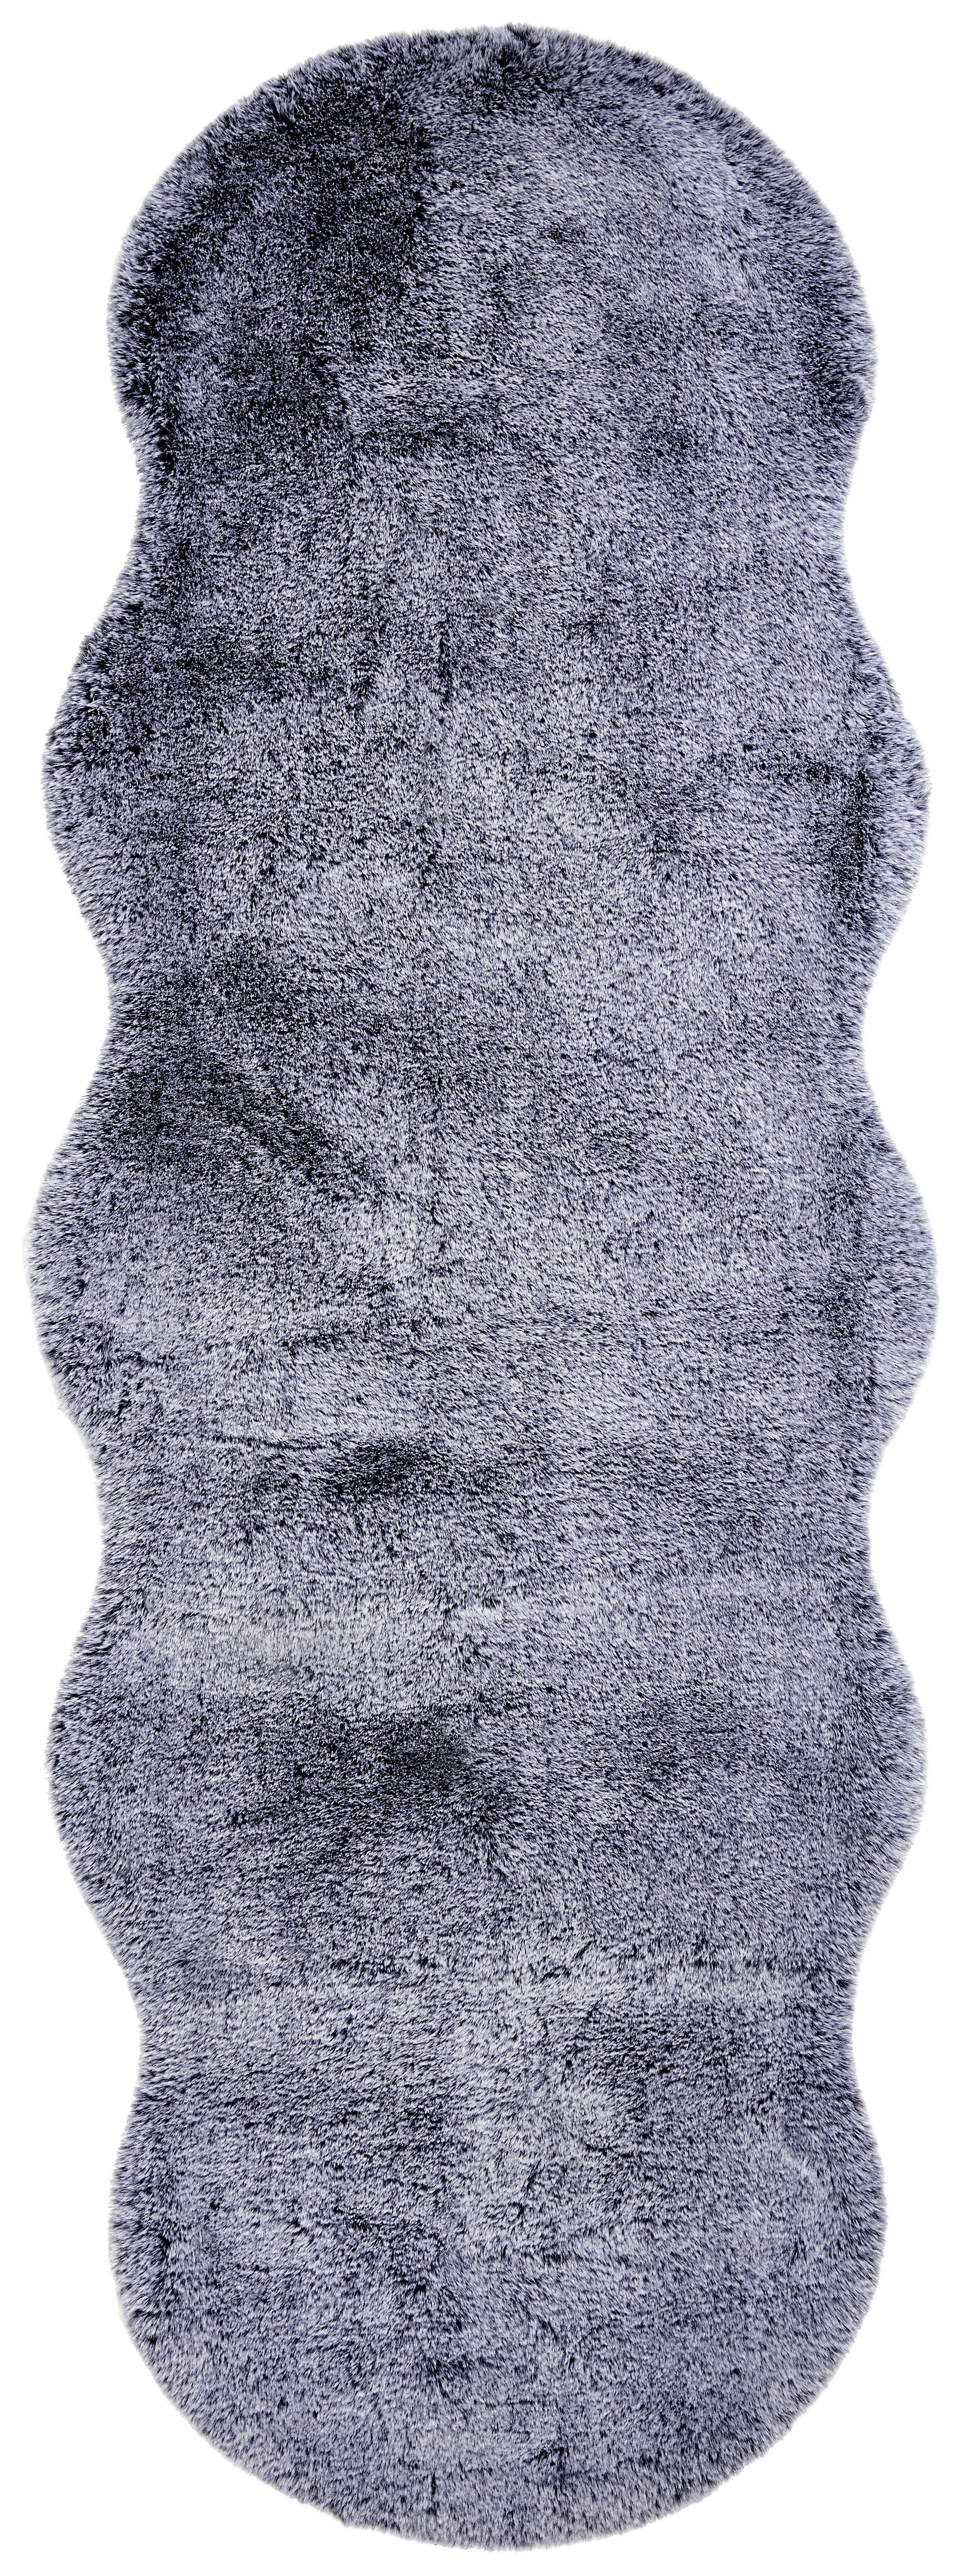 Fellteppich Misha Anthrazit 55x160 cm - Dunkelgrau/Anthrazit, MODERN, Textil (55/160cm) - Luca Bessoni